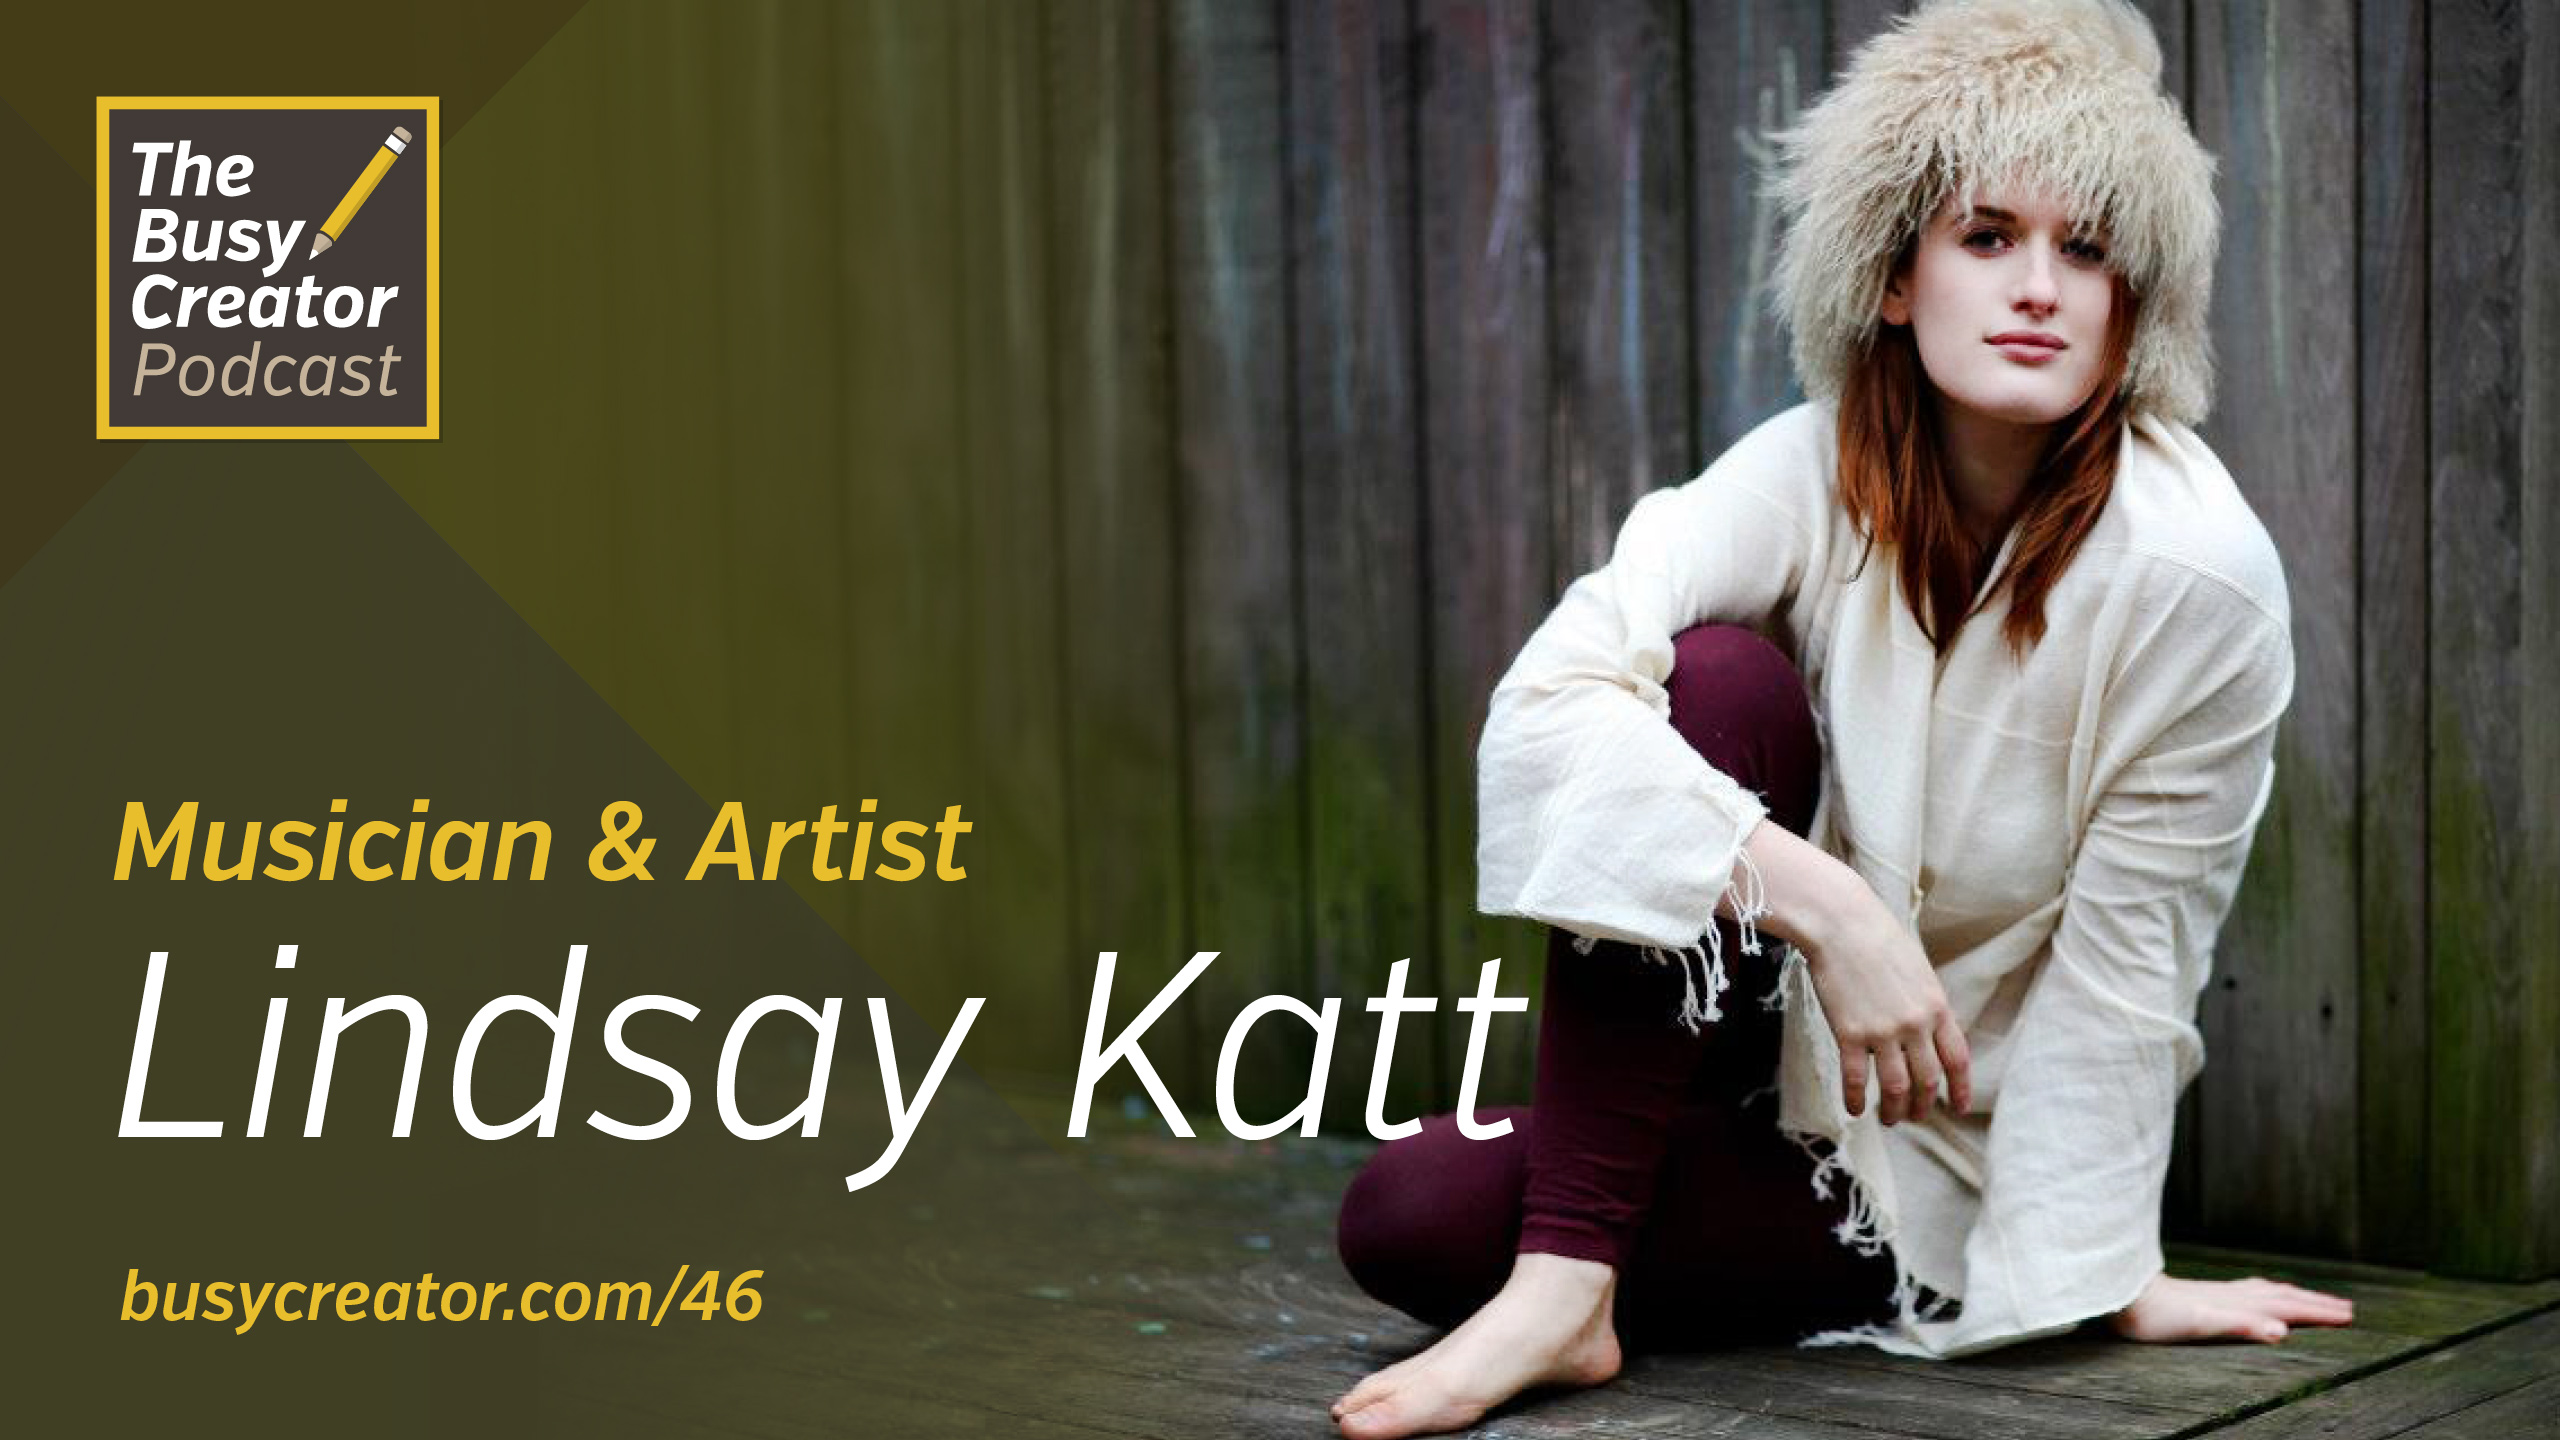 Artist & Musician Lindsay Katt Shares Her Quest to Do Everything